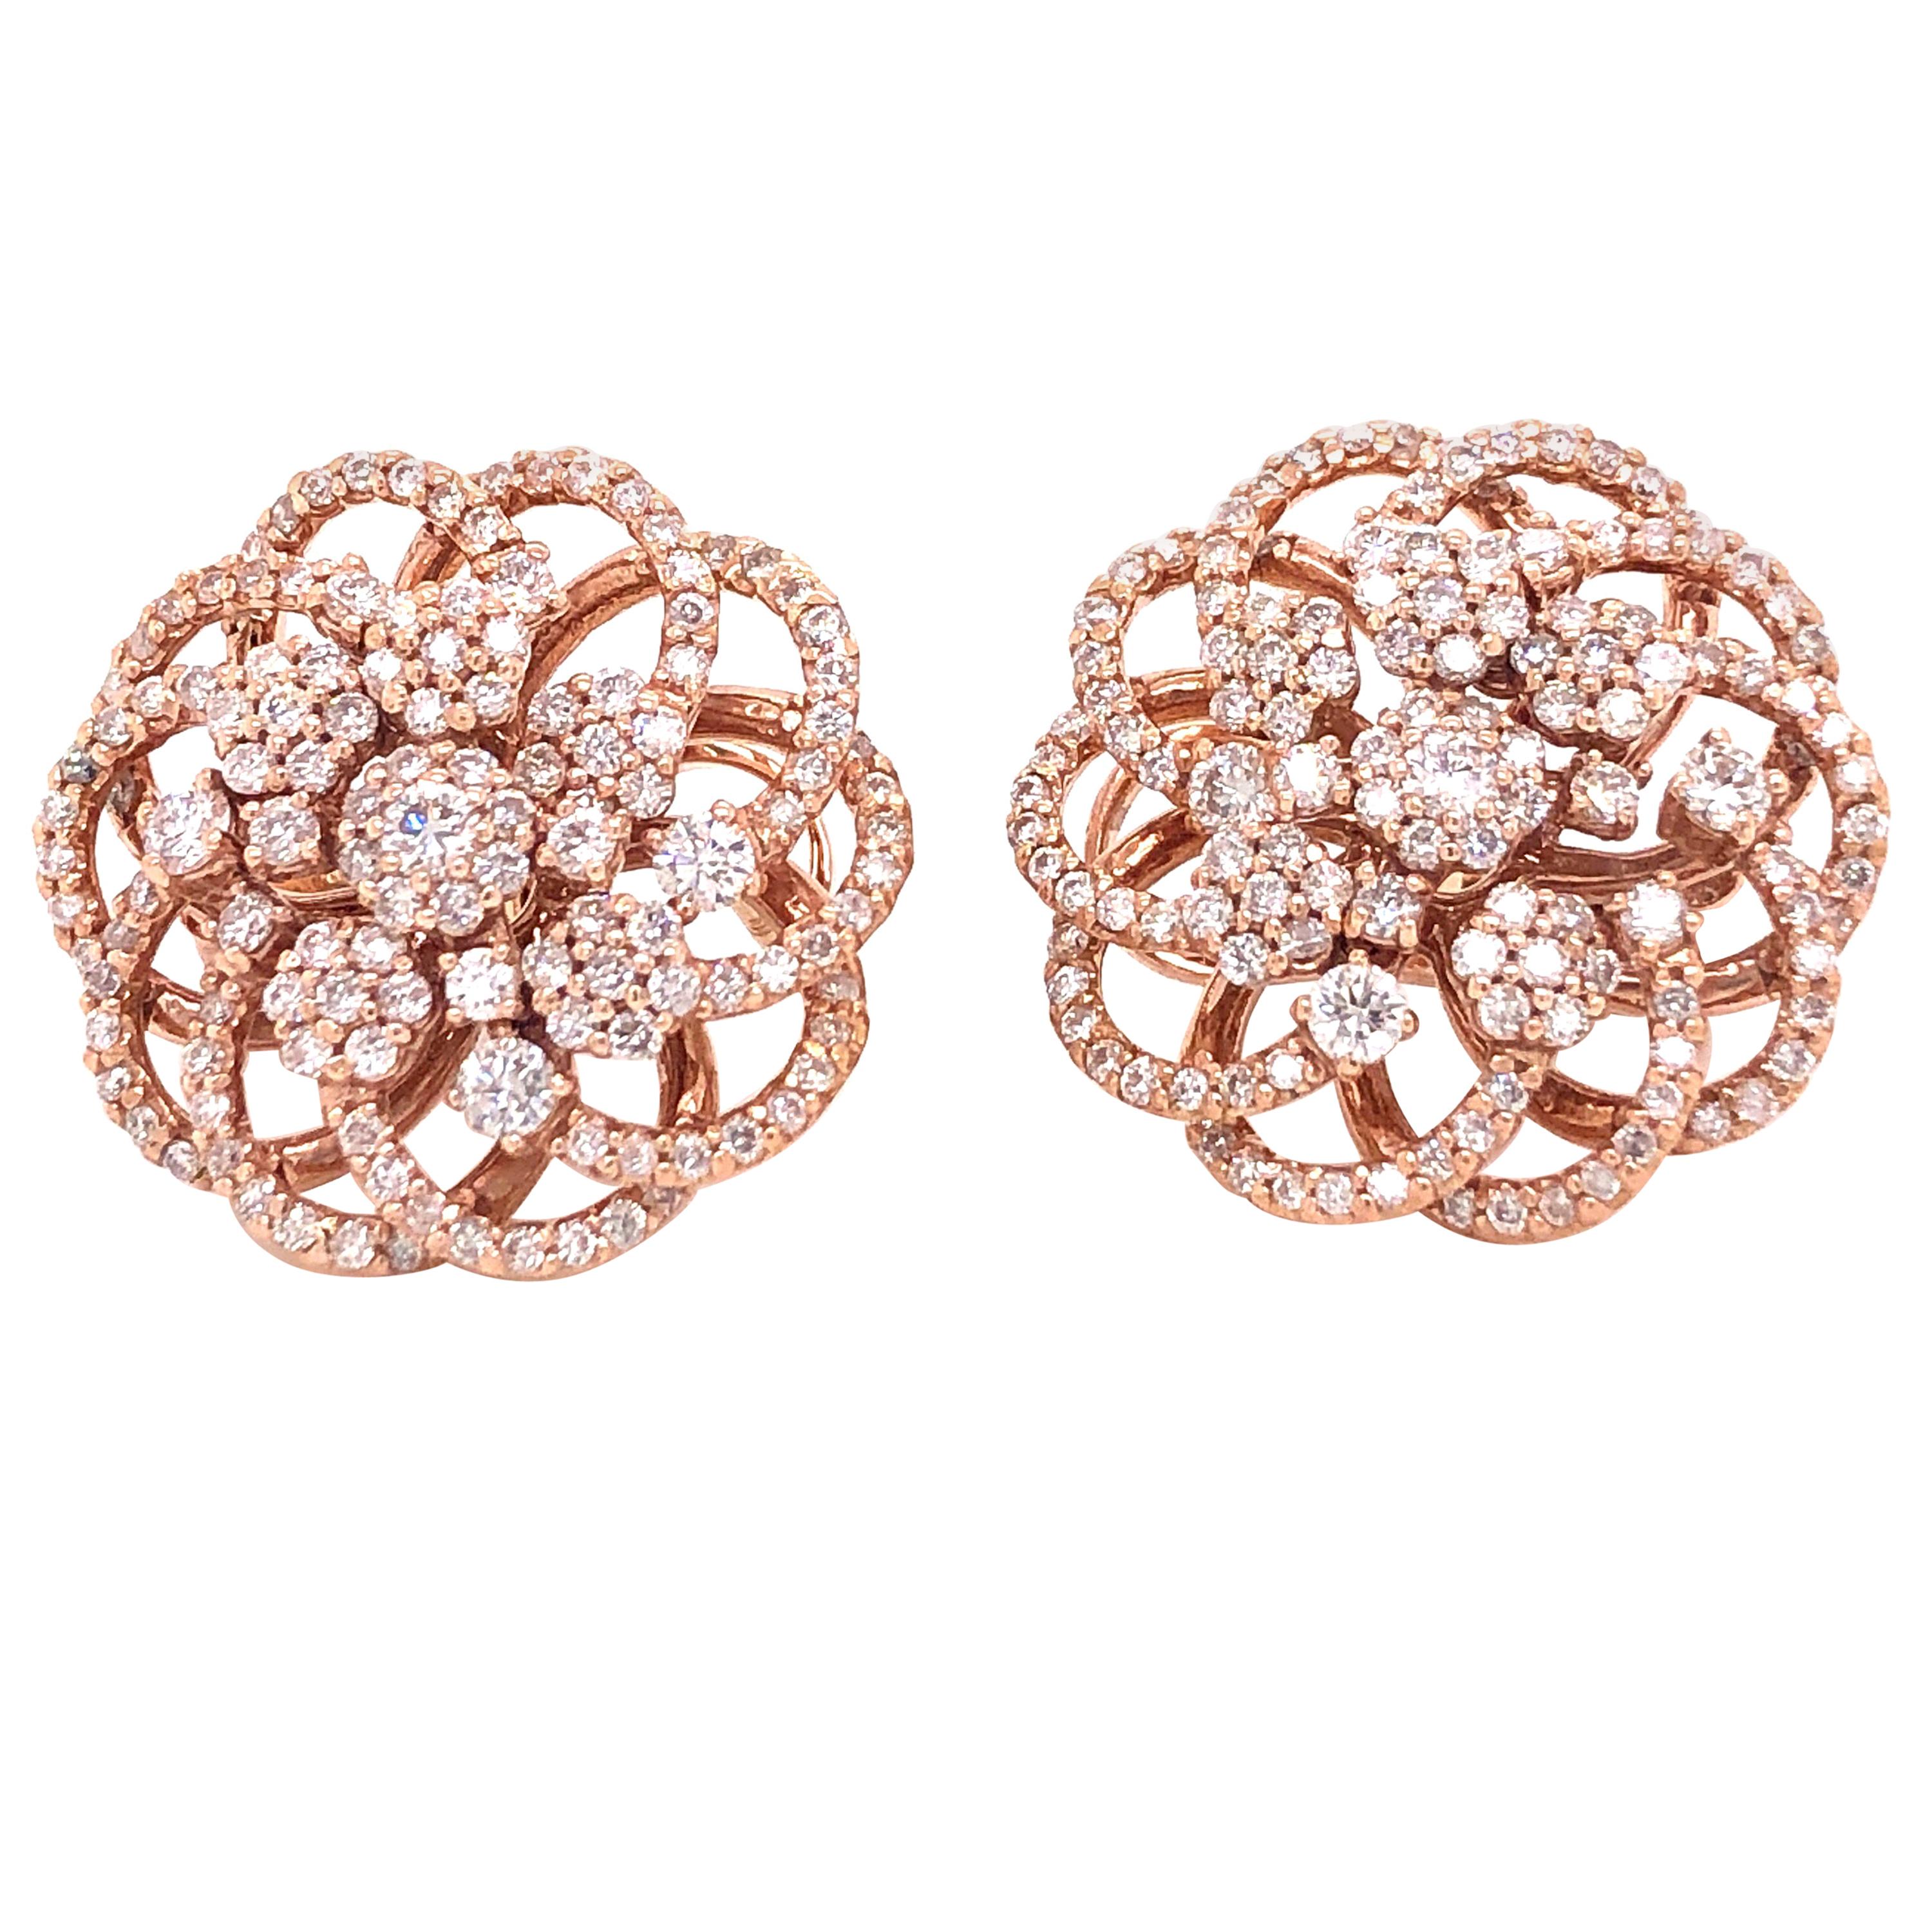 Emilio Jewelry 1.89 Carat Rose Gold Diamond Earrings